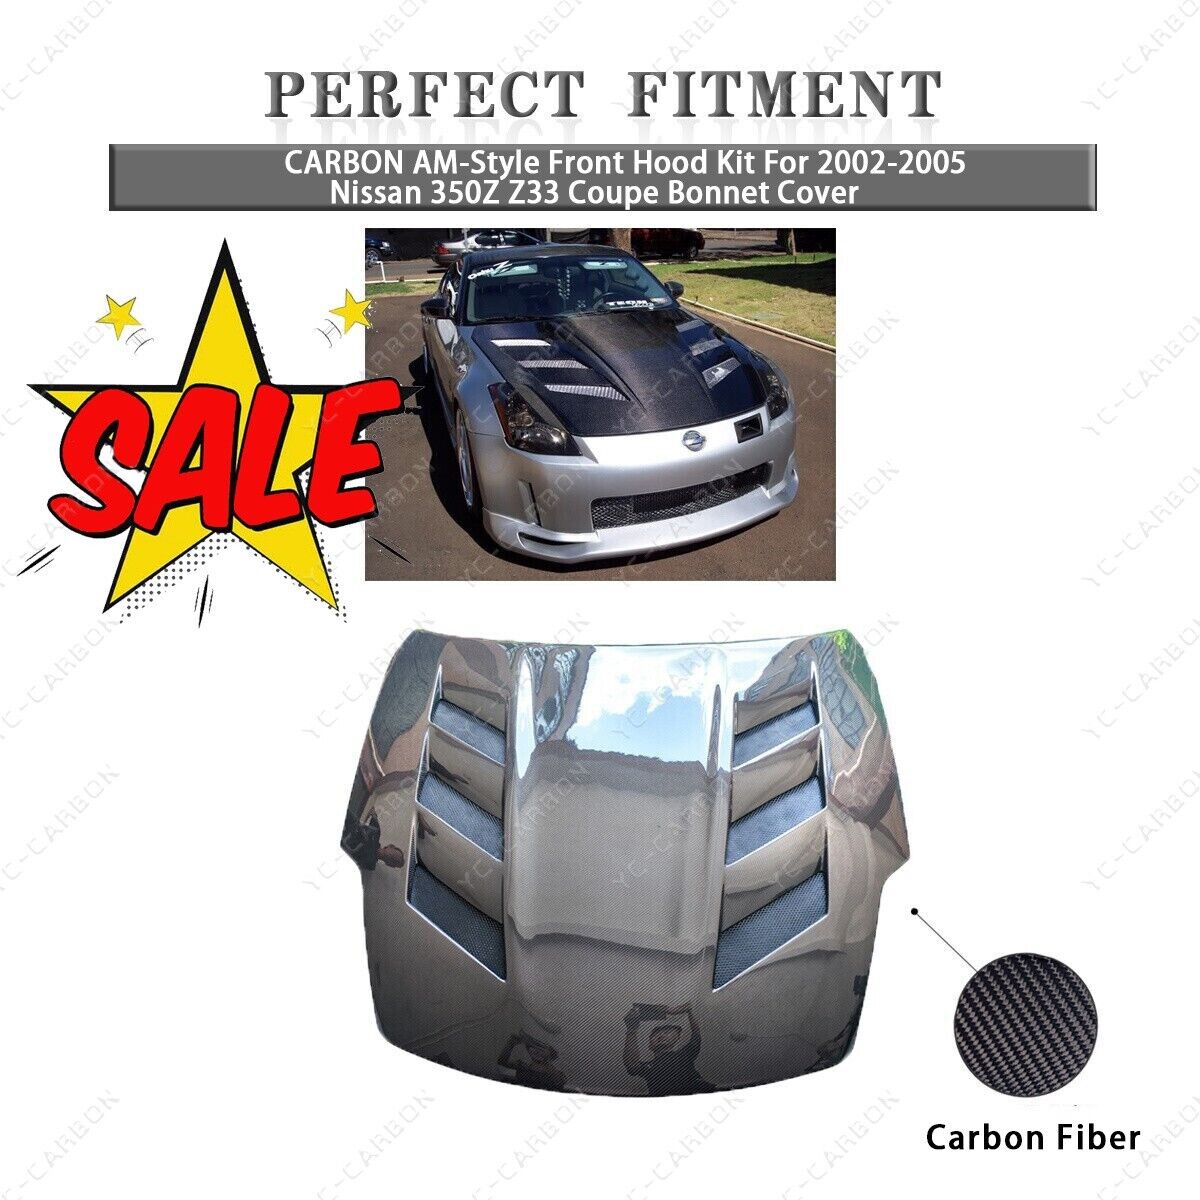 CARBON AM-Style Front Hood Kit For 2002-2005 Nissan 350Z Z33 Coupe Bonnet Cover